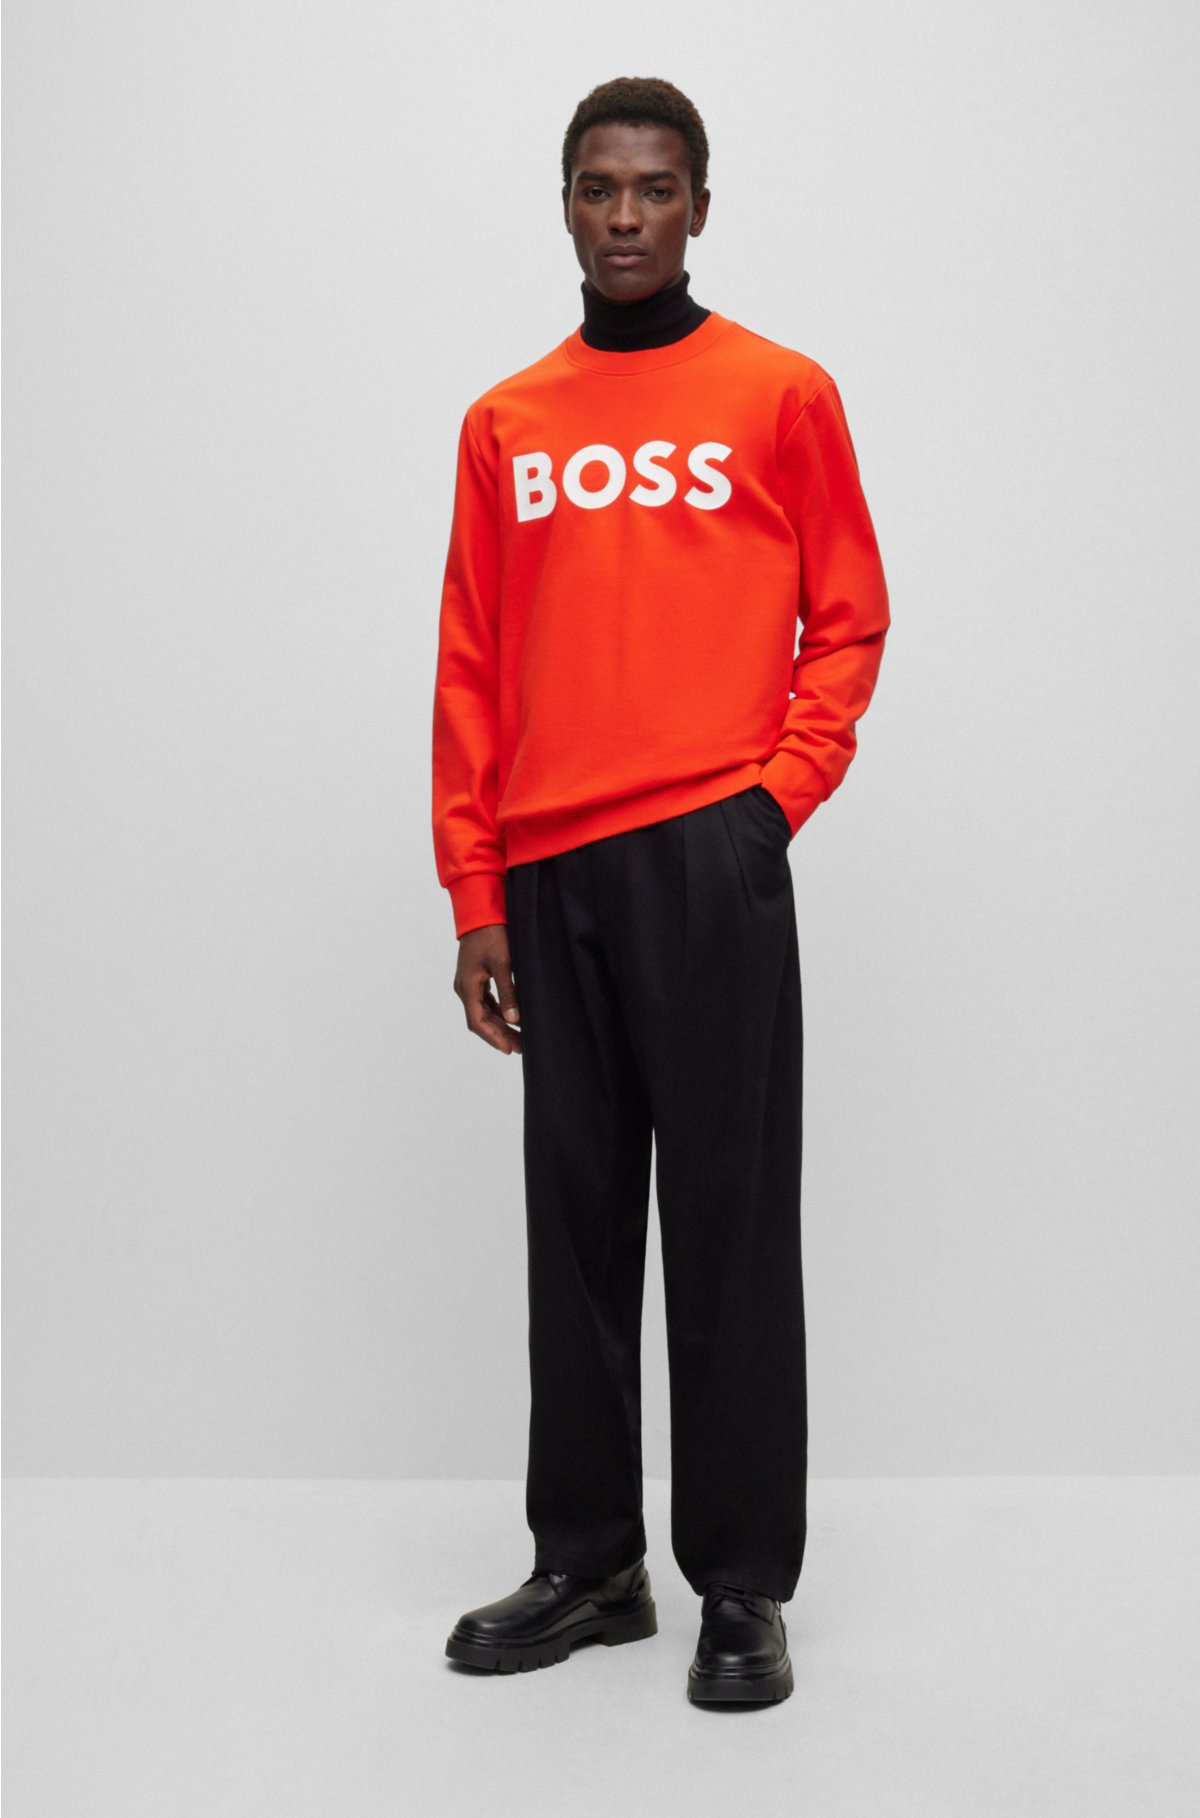 Cotton sweatshirt with rubber-print logo, Orange